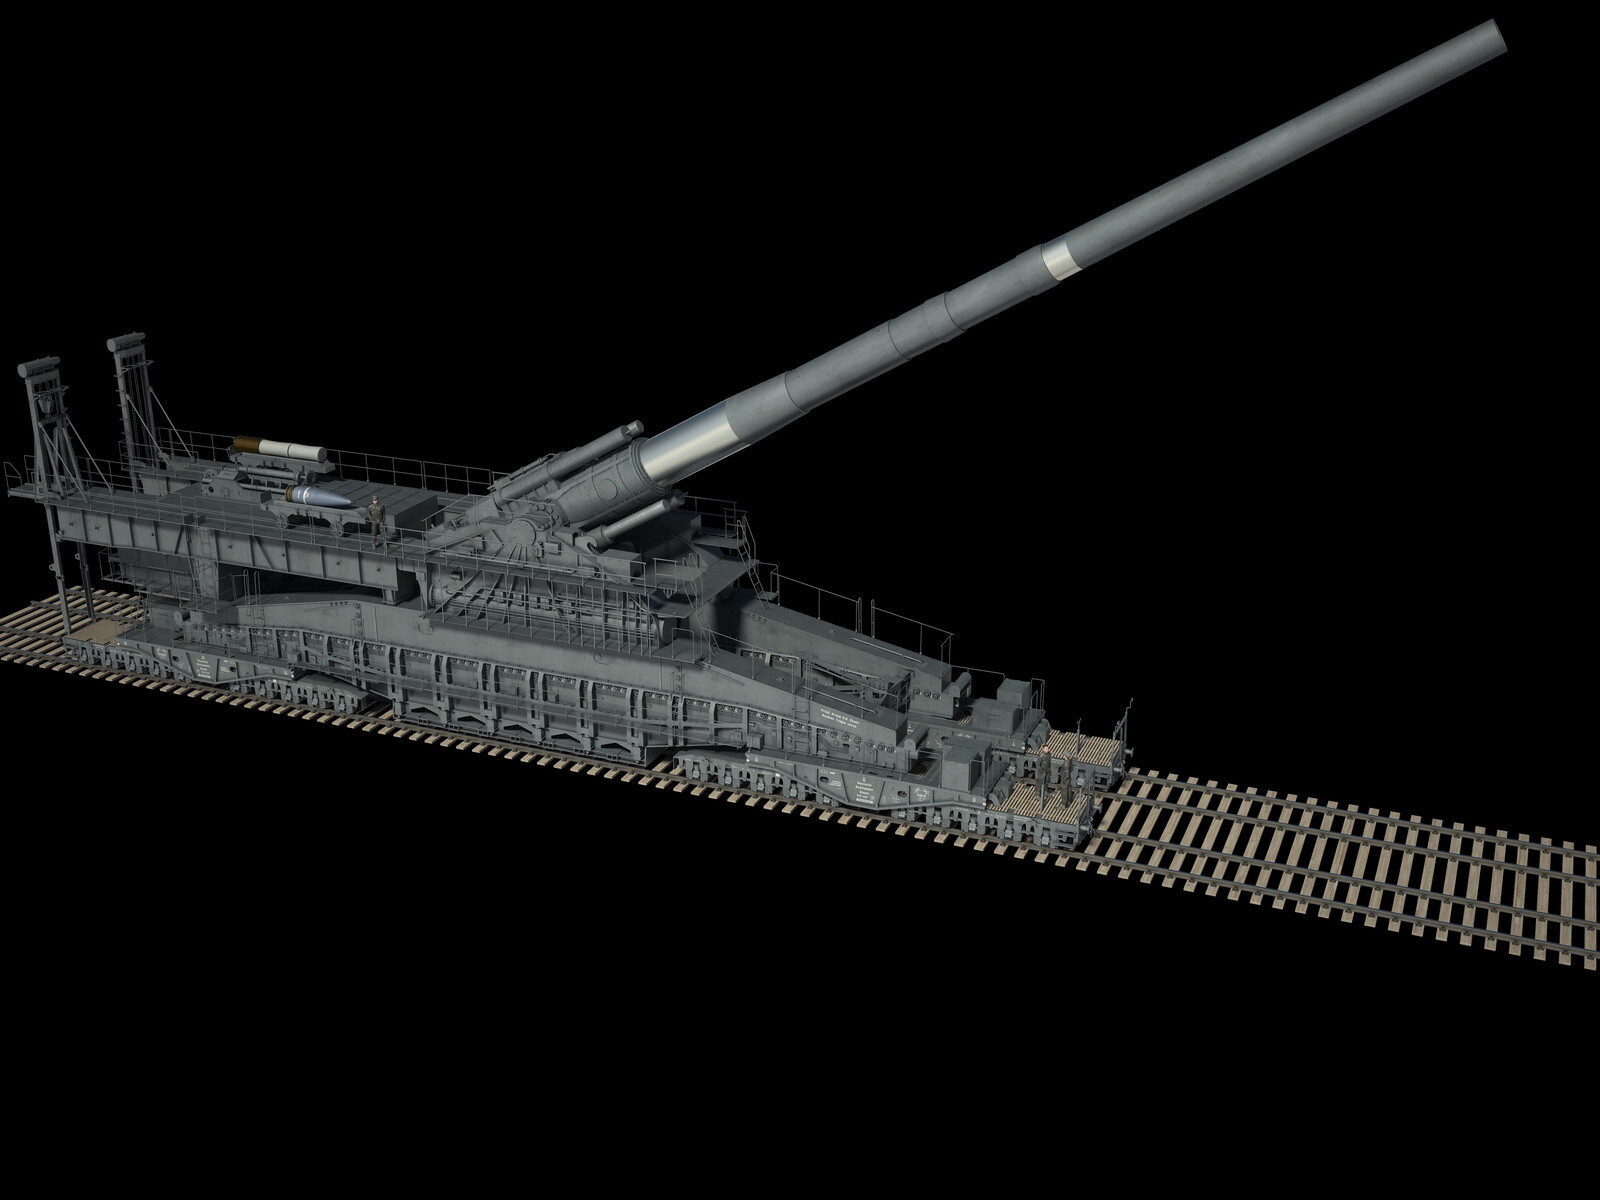 TankHistoria - Schwerer Gustav was a German 80-centimetre (31.5 in) railway  gun. It was developed in the late 1930s by Krupp in Rügenwalde as siege  artillery for the explicit purpose of destroying